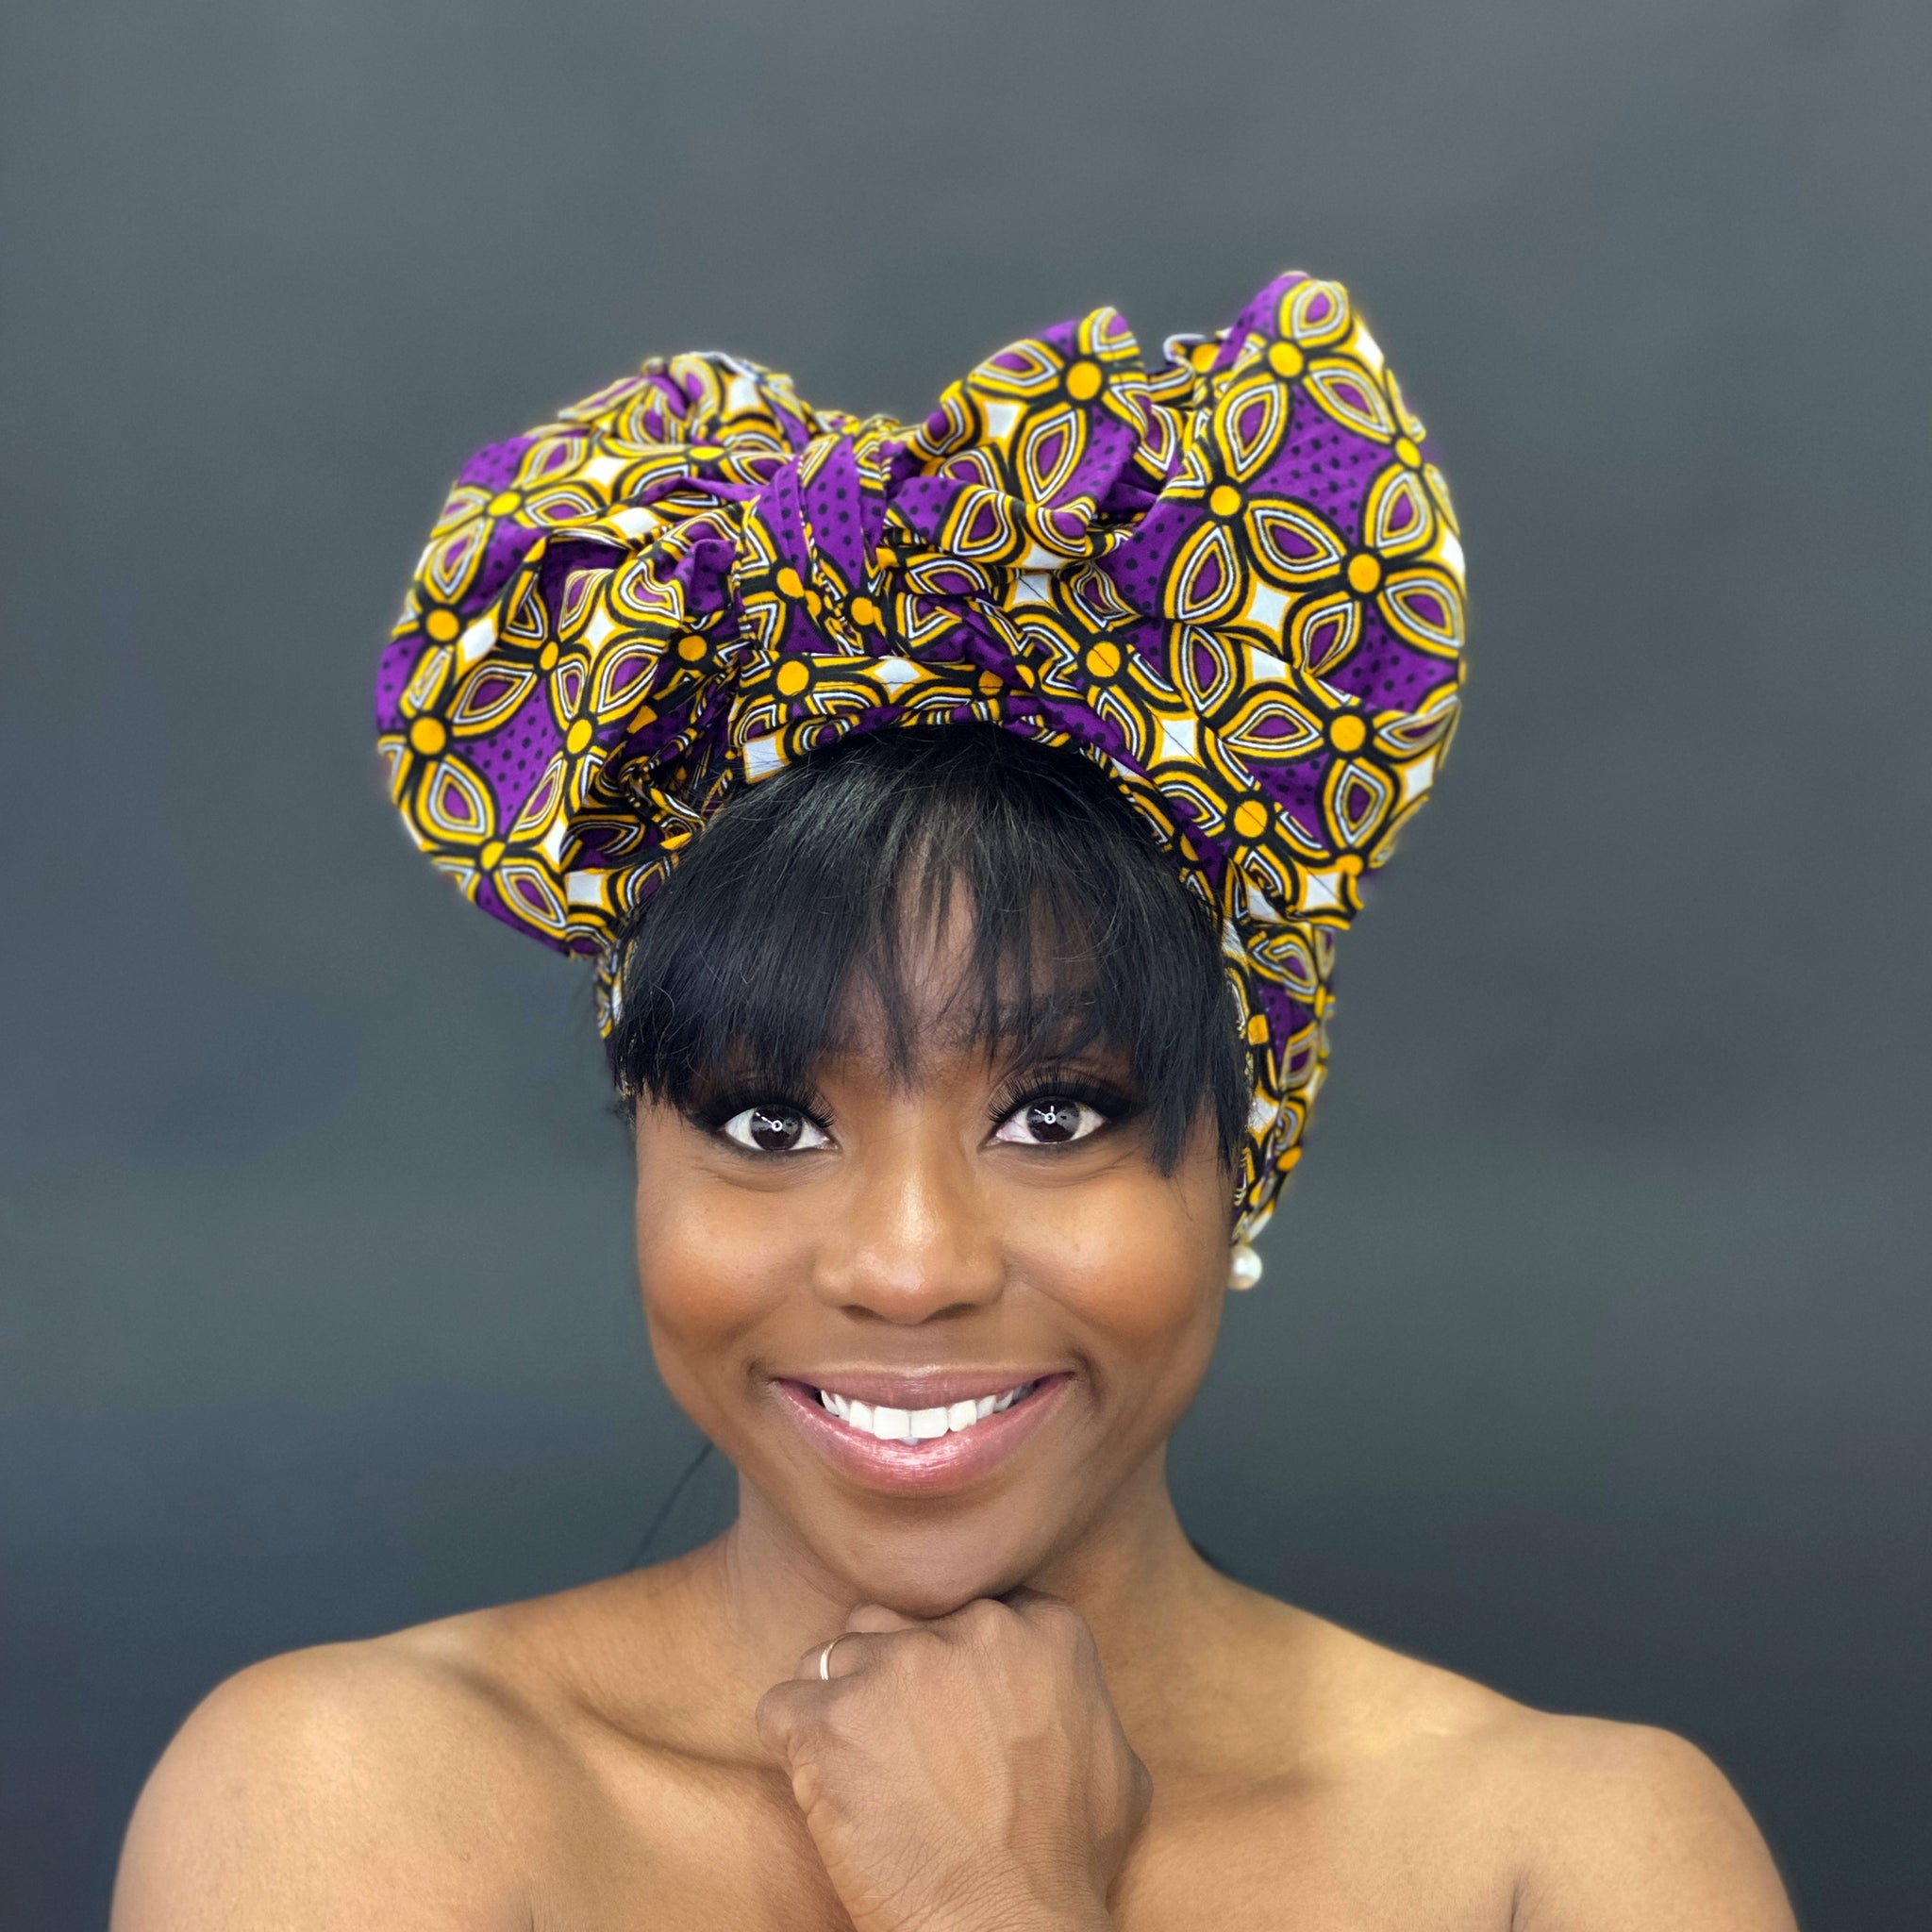 Cinta para la cabeza africana - Patrón real púrpura